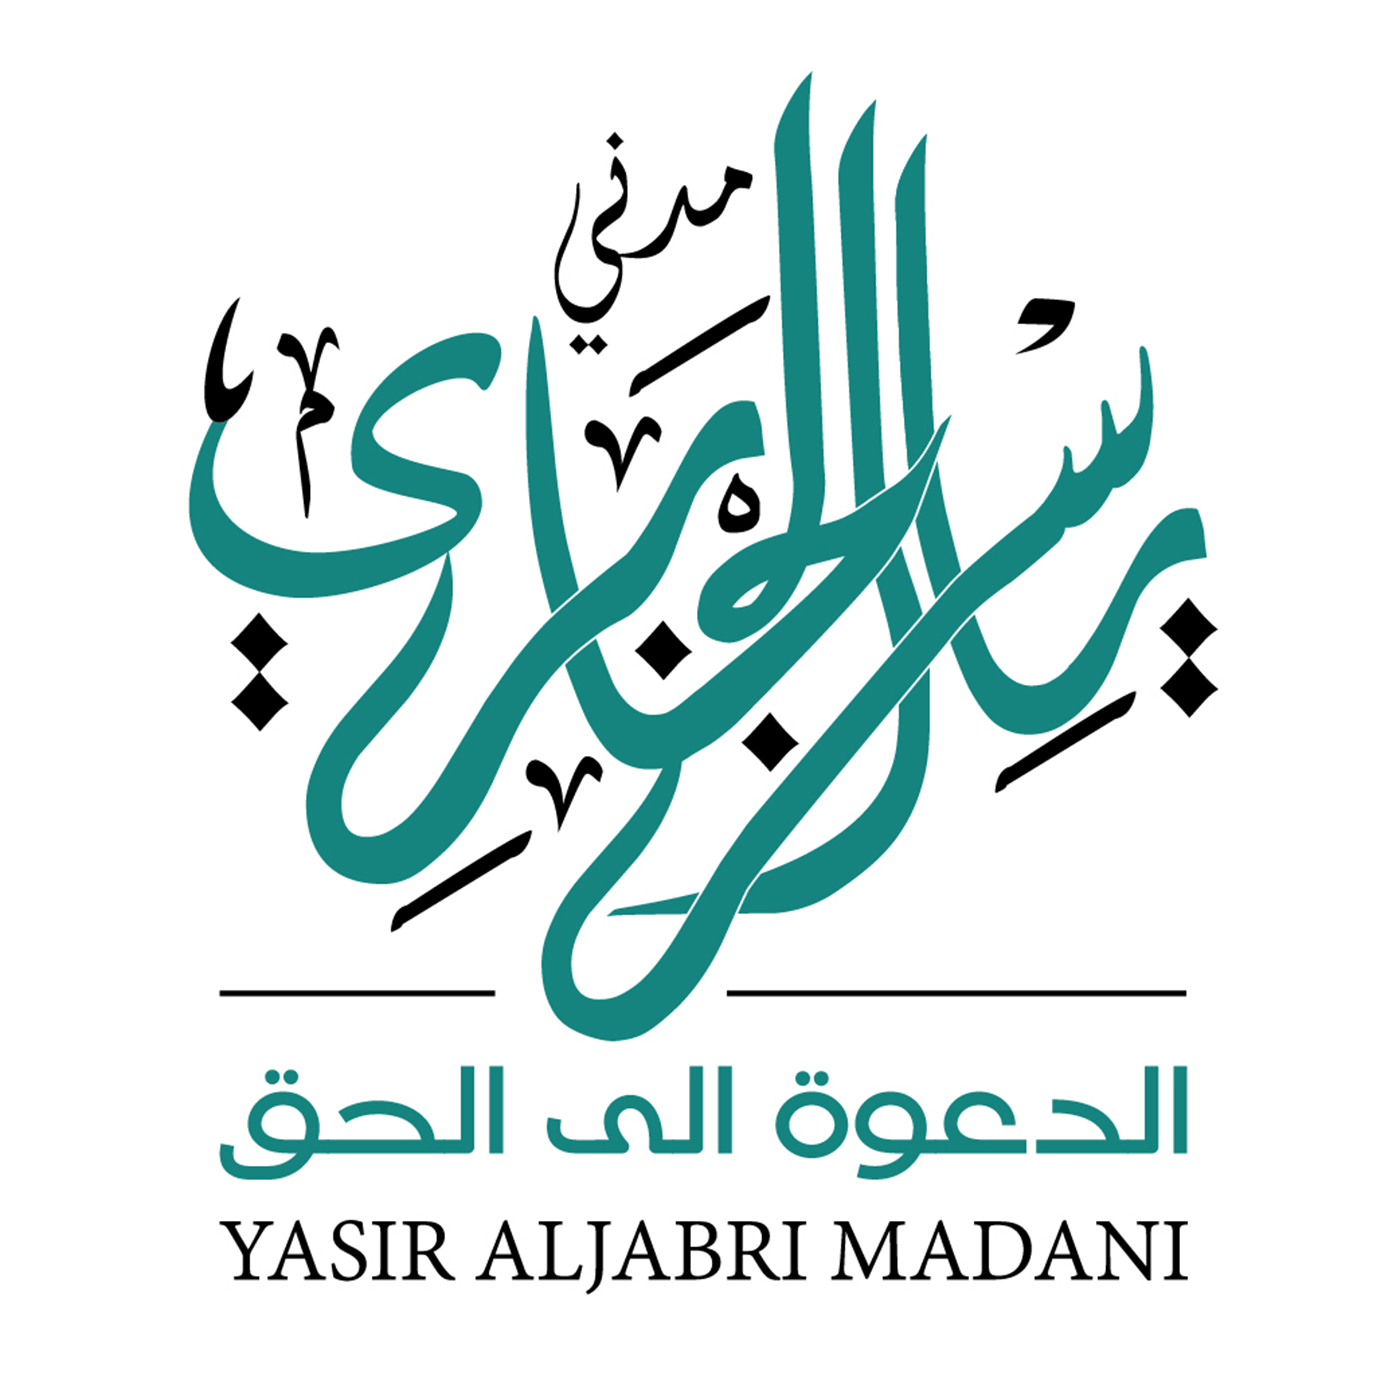 Podfanatic Podcast Shaikh Yasir Aljabri Madani Blog